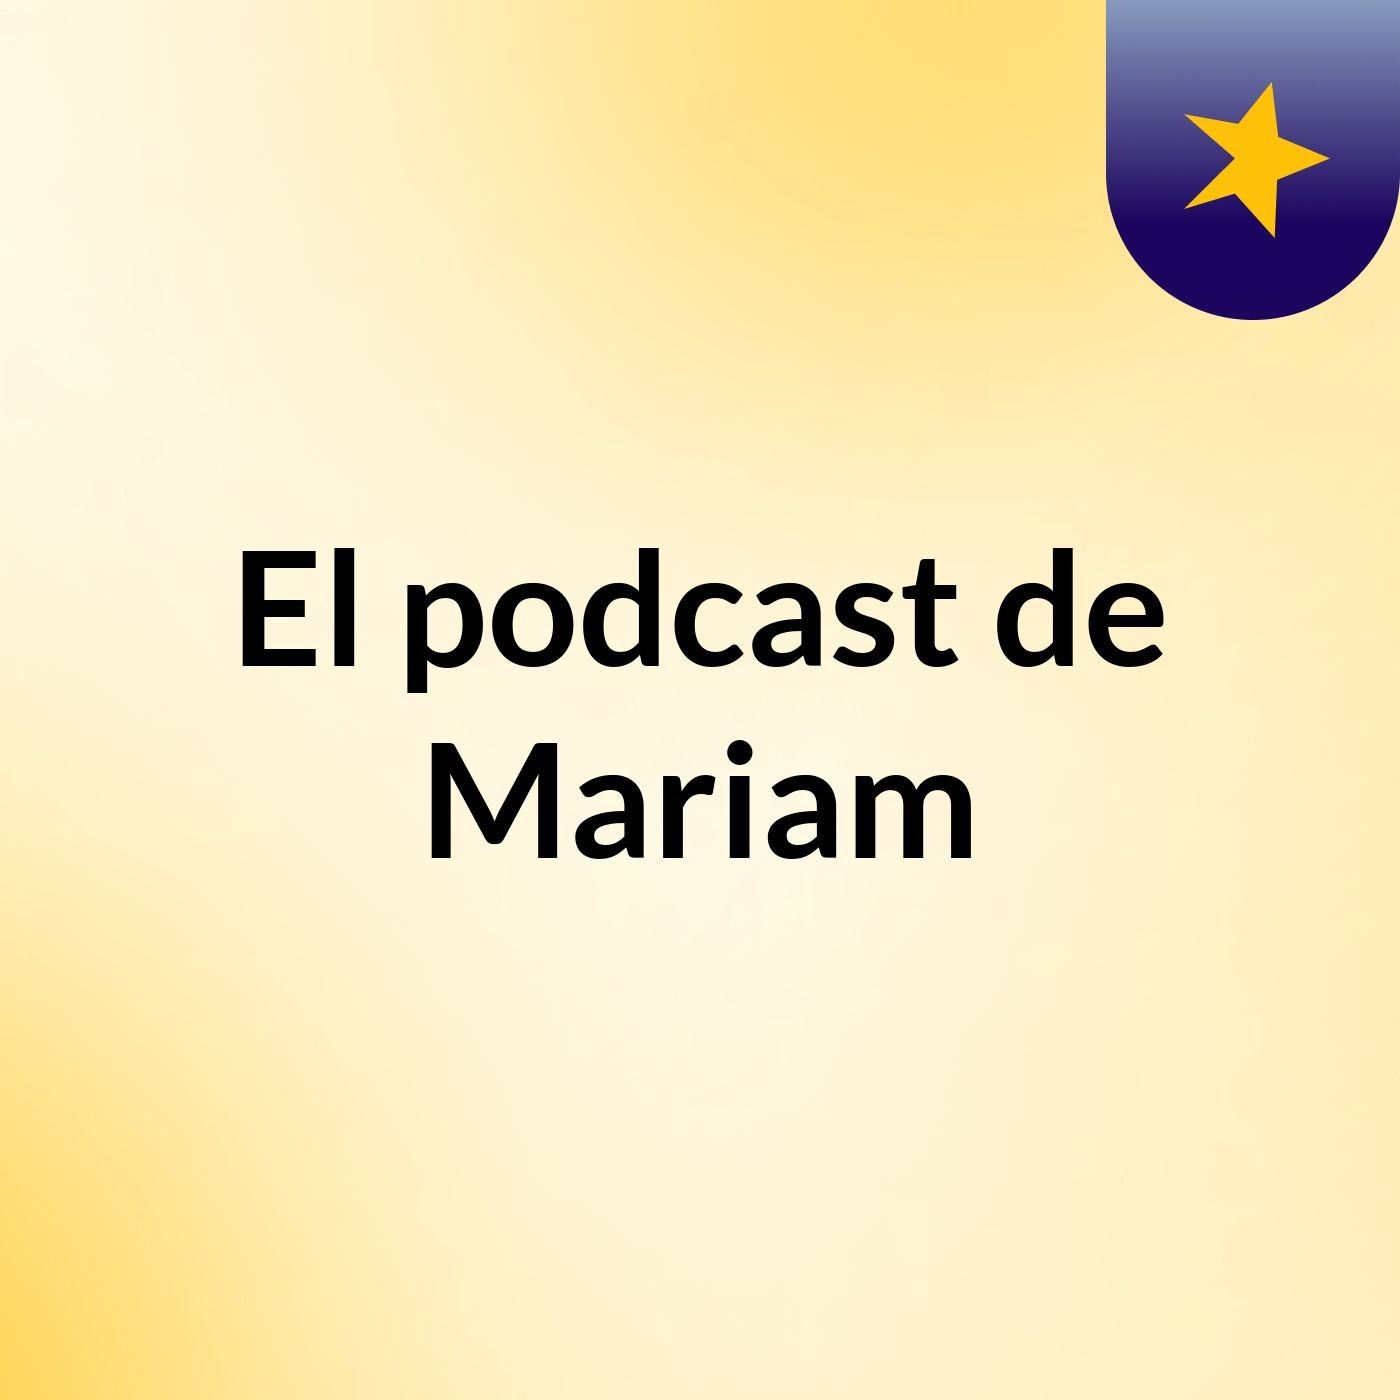 El podcast de Mariam